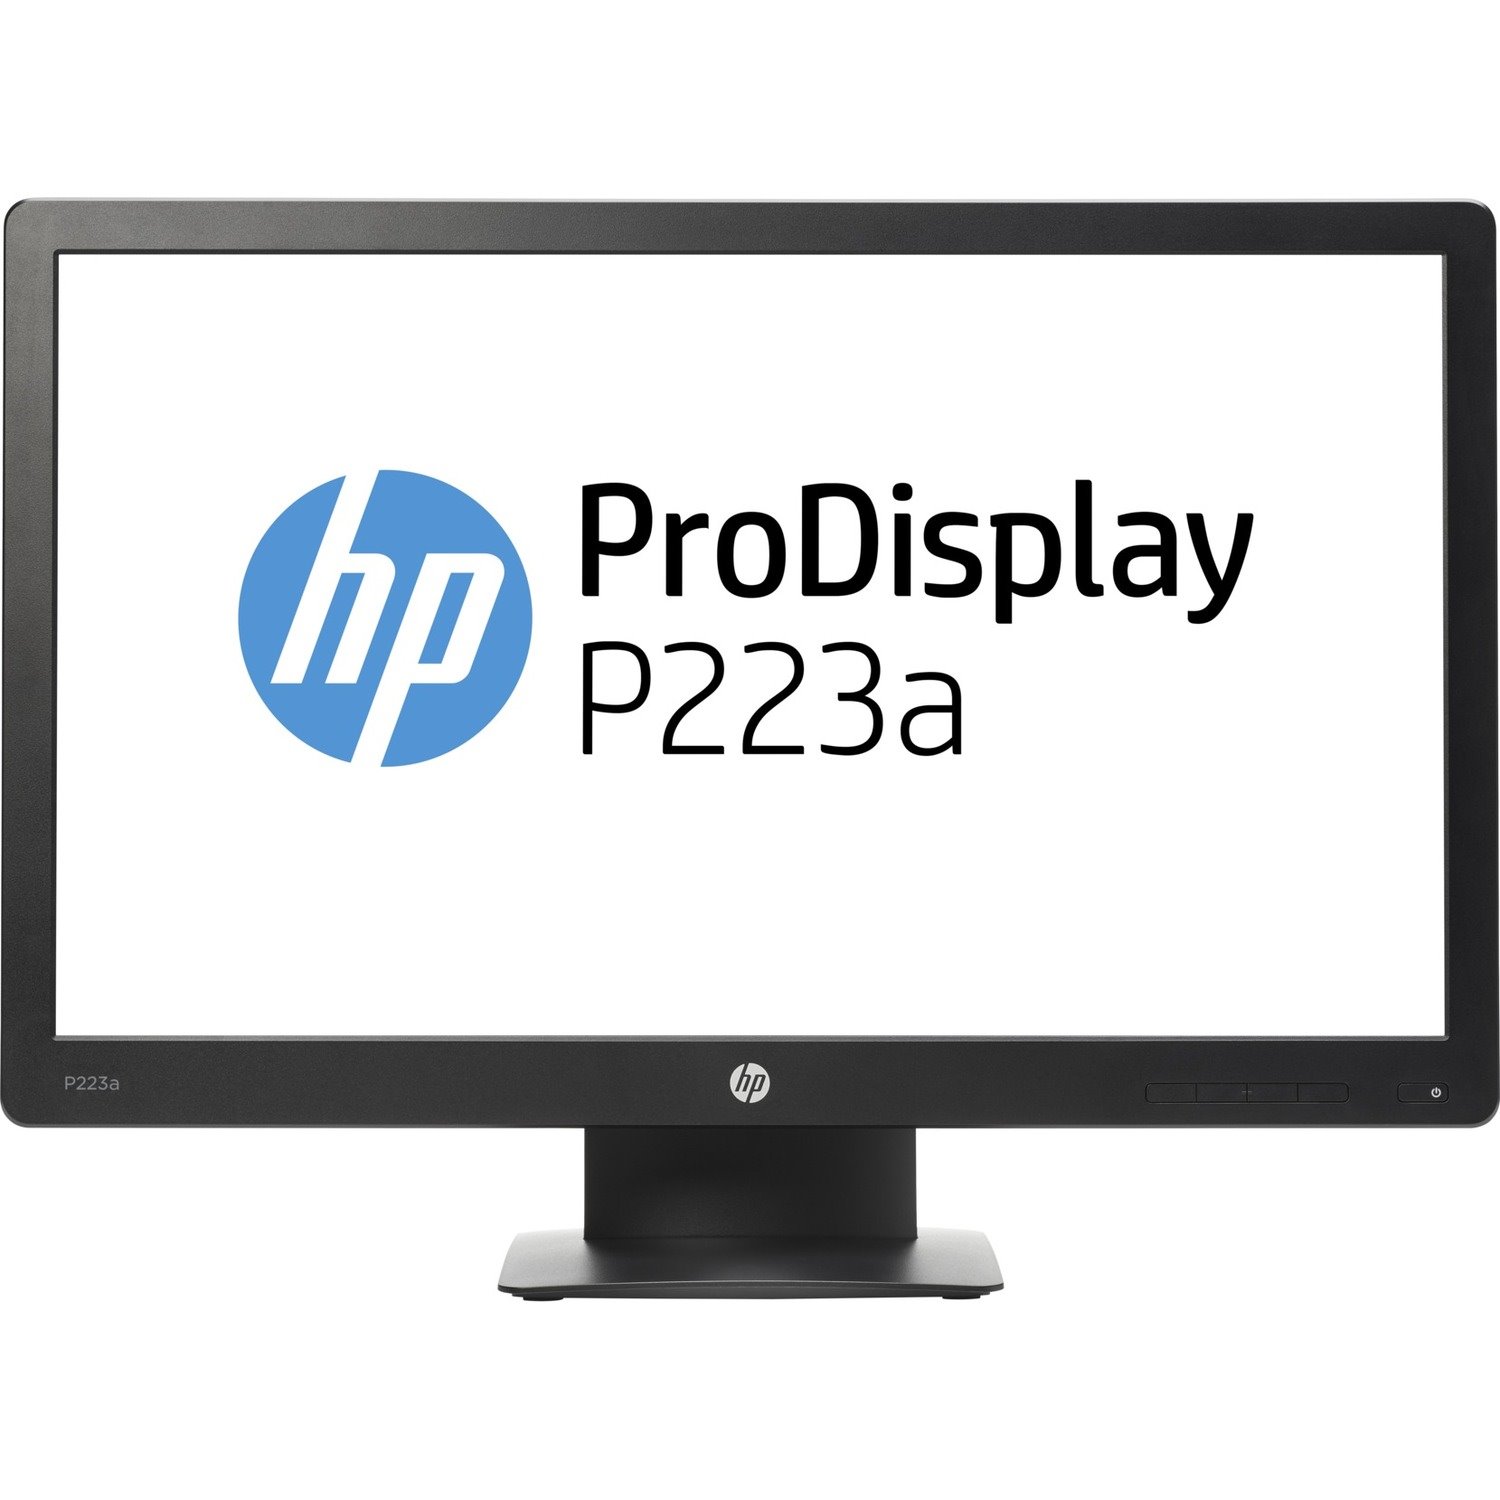 HP Business P223a Full HD LCD Monitor - 16:9 - Black